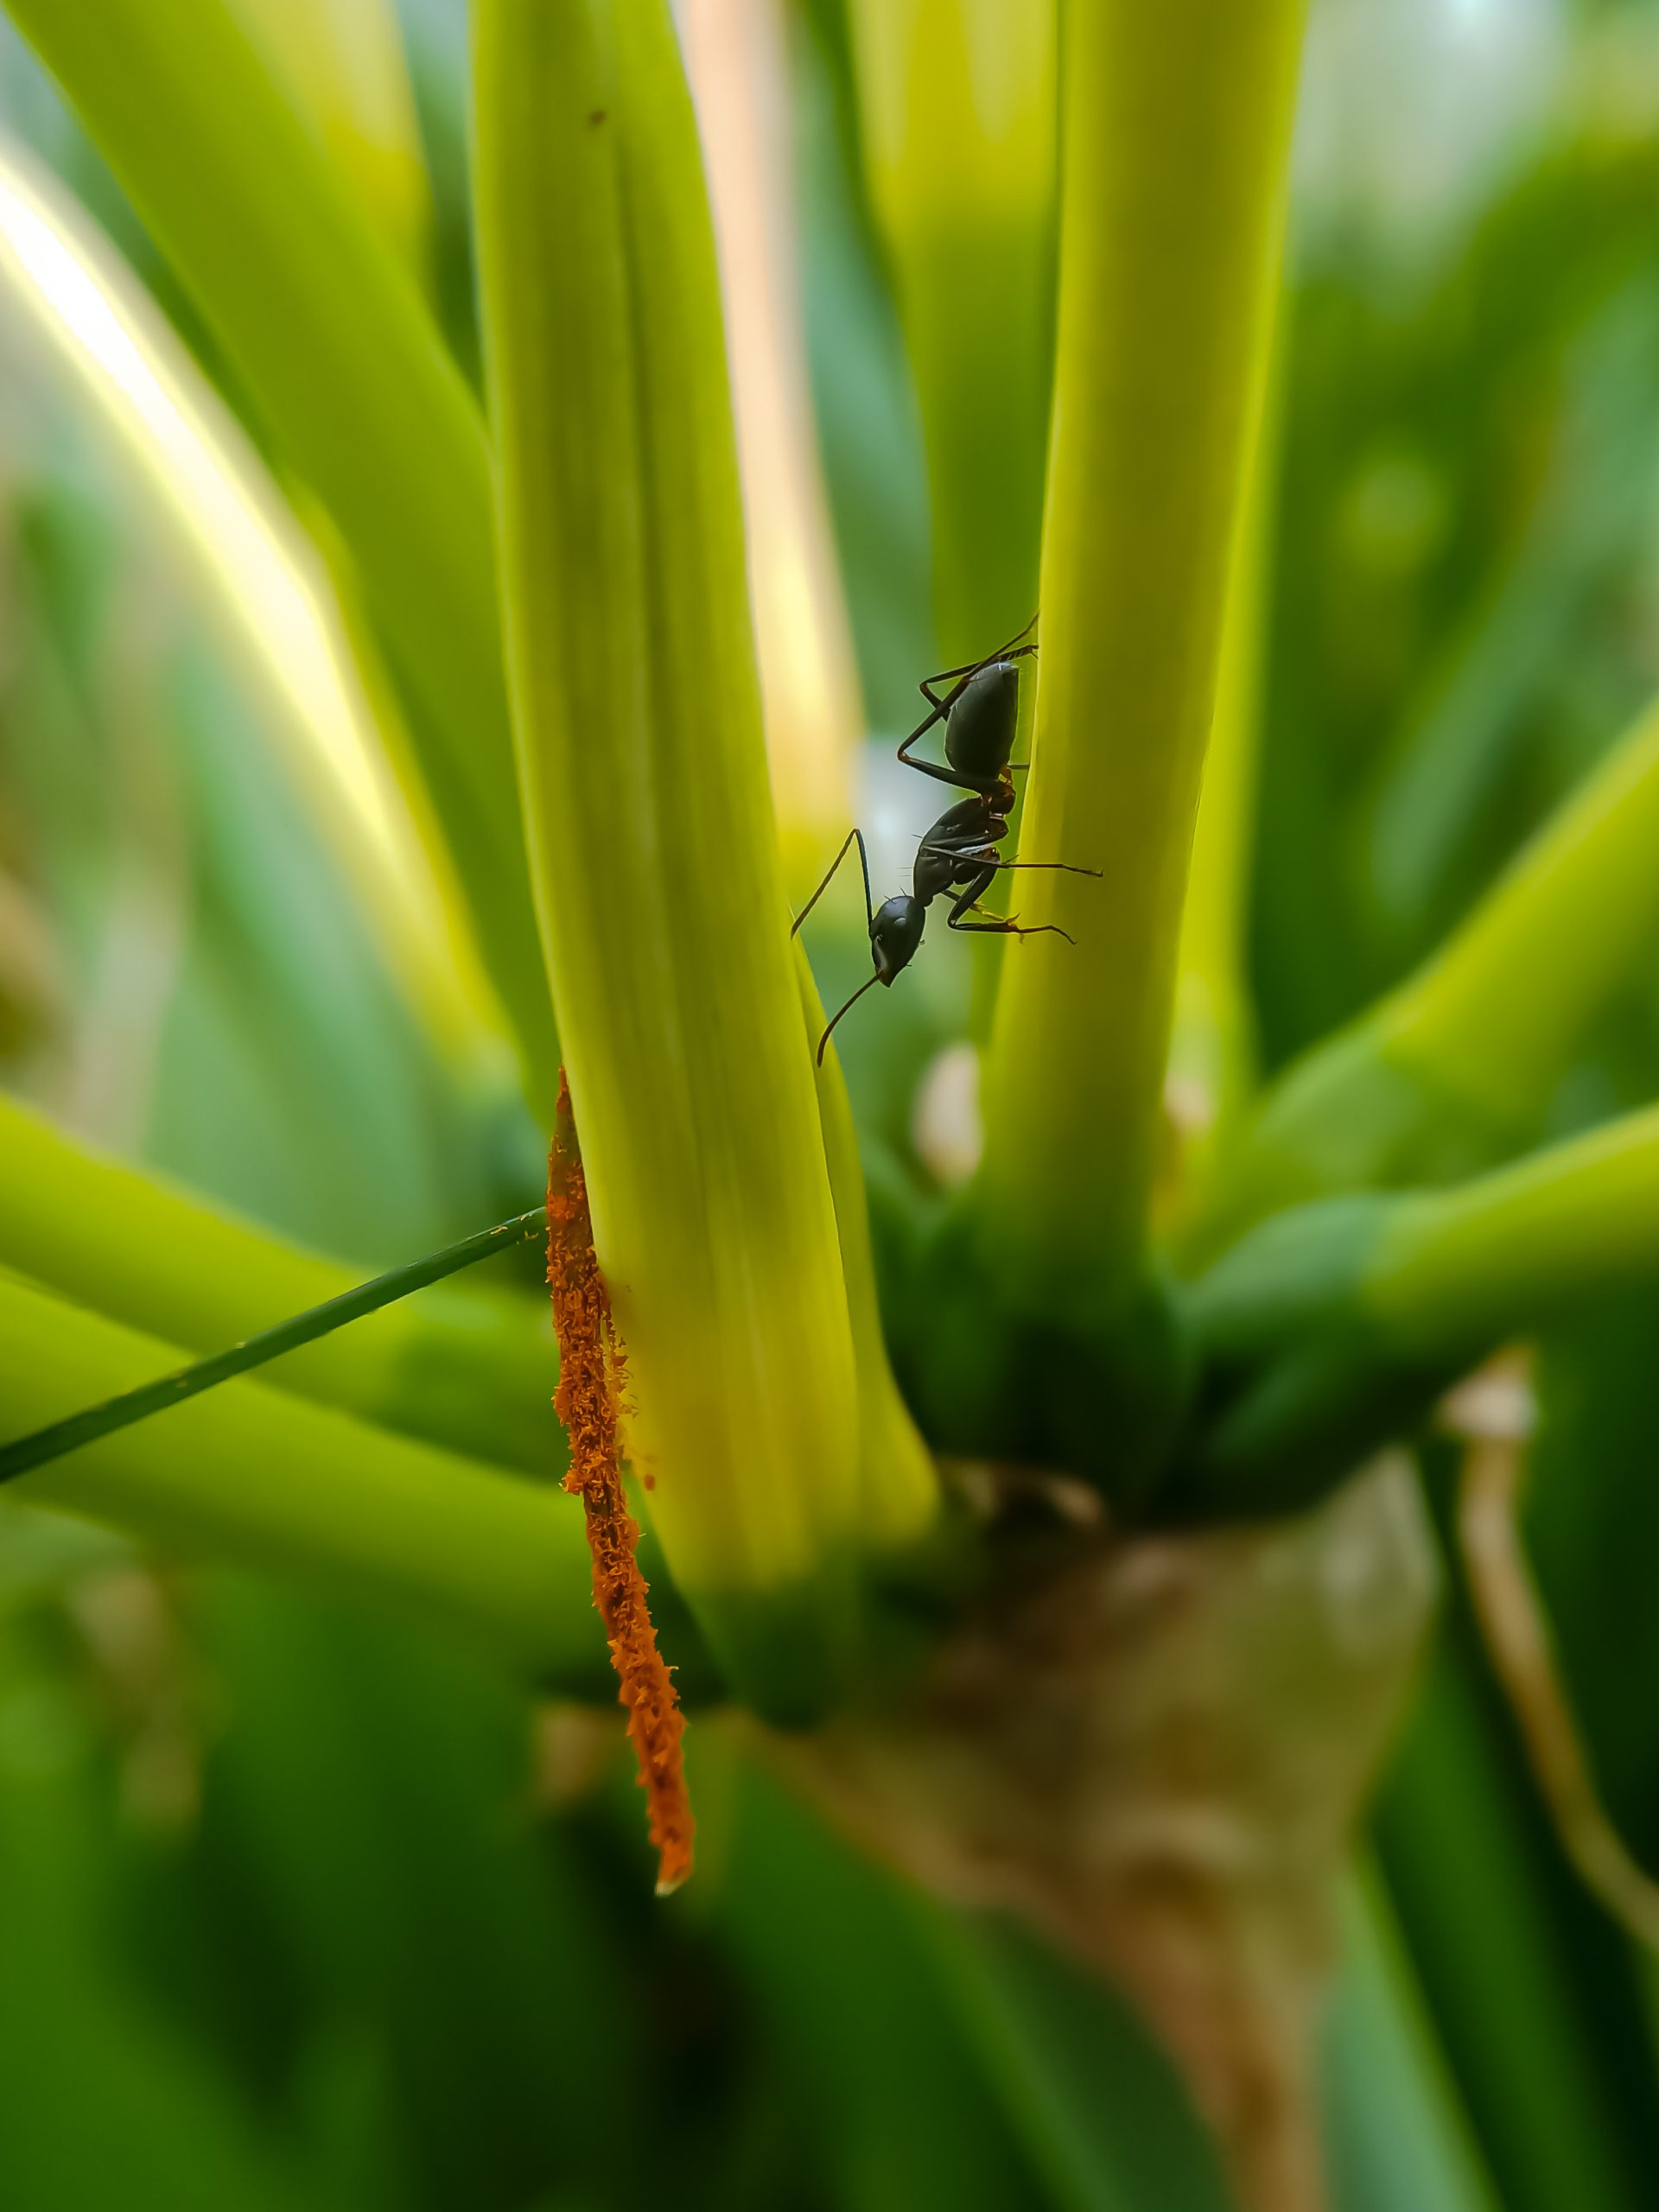 Ant walking on plant stem